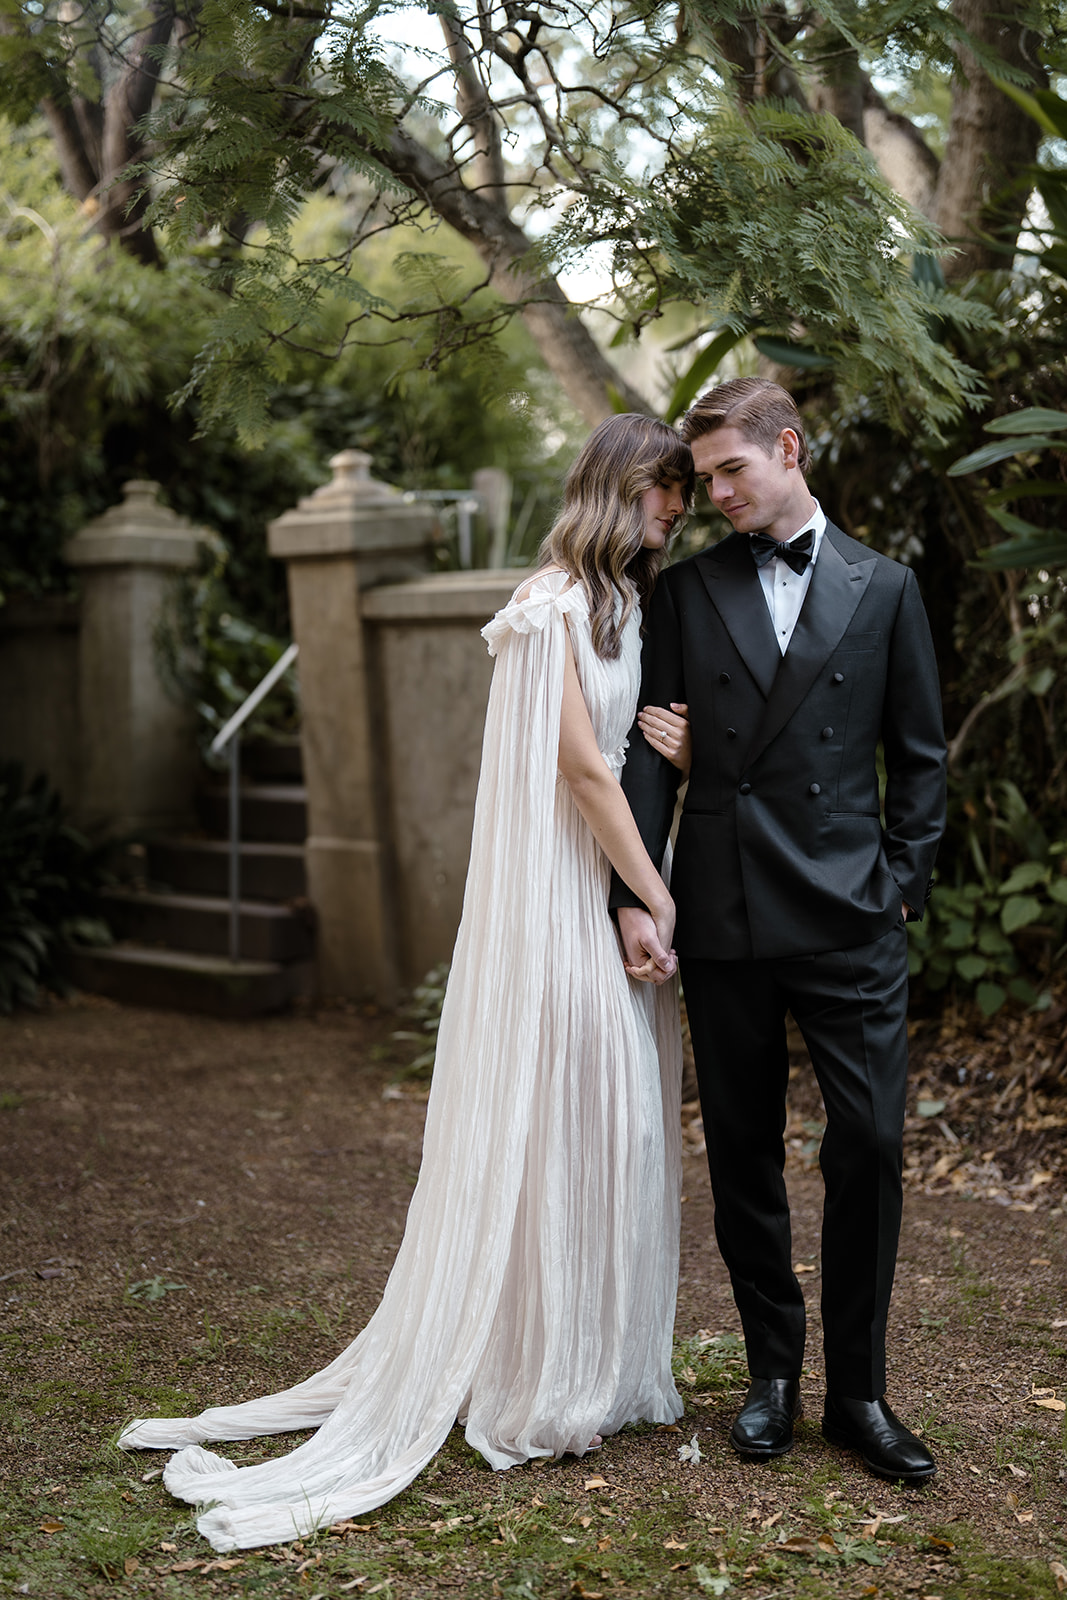 Melbourne Wedding Photography - Elegant Bride and Groom at Villa Alba